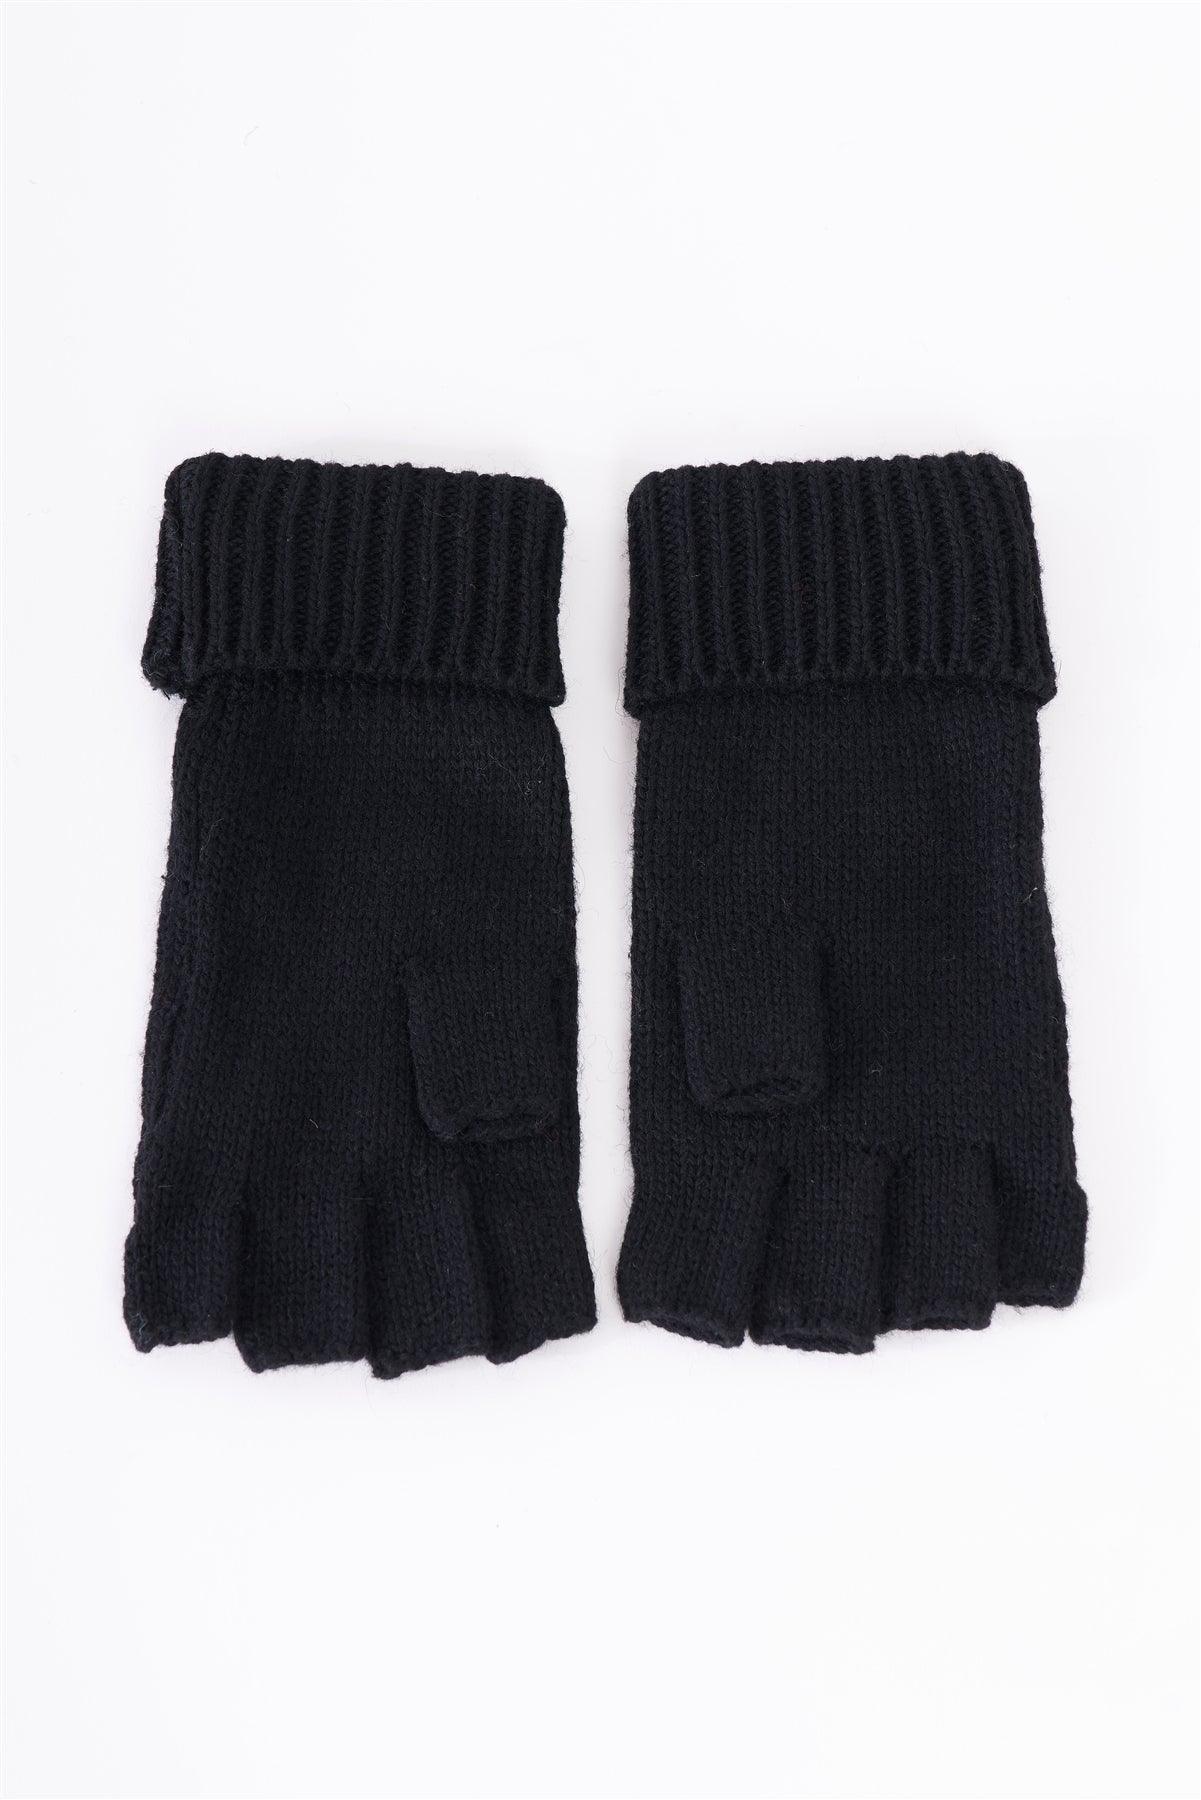 Black Fingerless Snowflakes Pearl Rhinestone Winter Gloves /3 Pieces